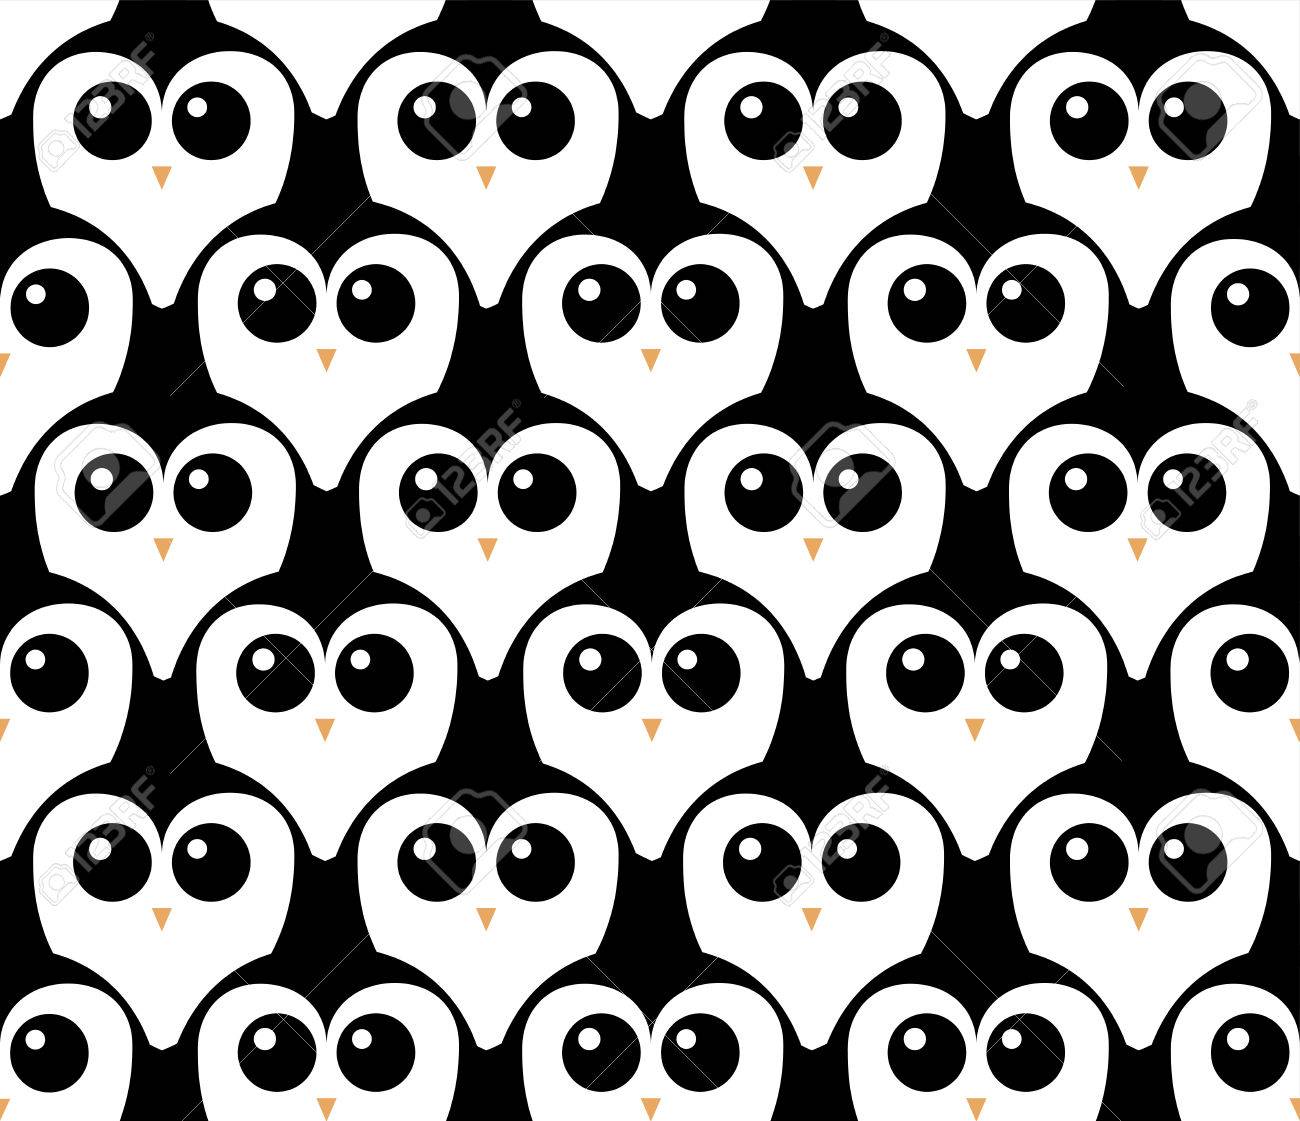 Penguins Cute Faces Seamless Vector Wallpaper Royalty Free